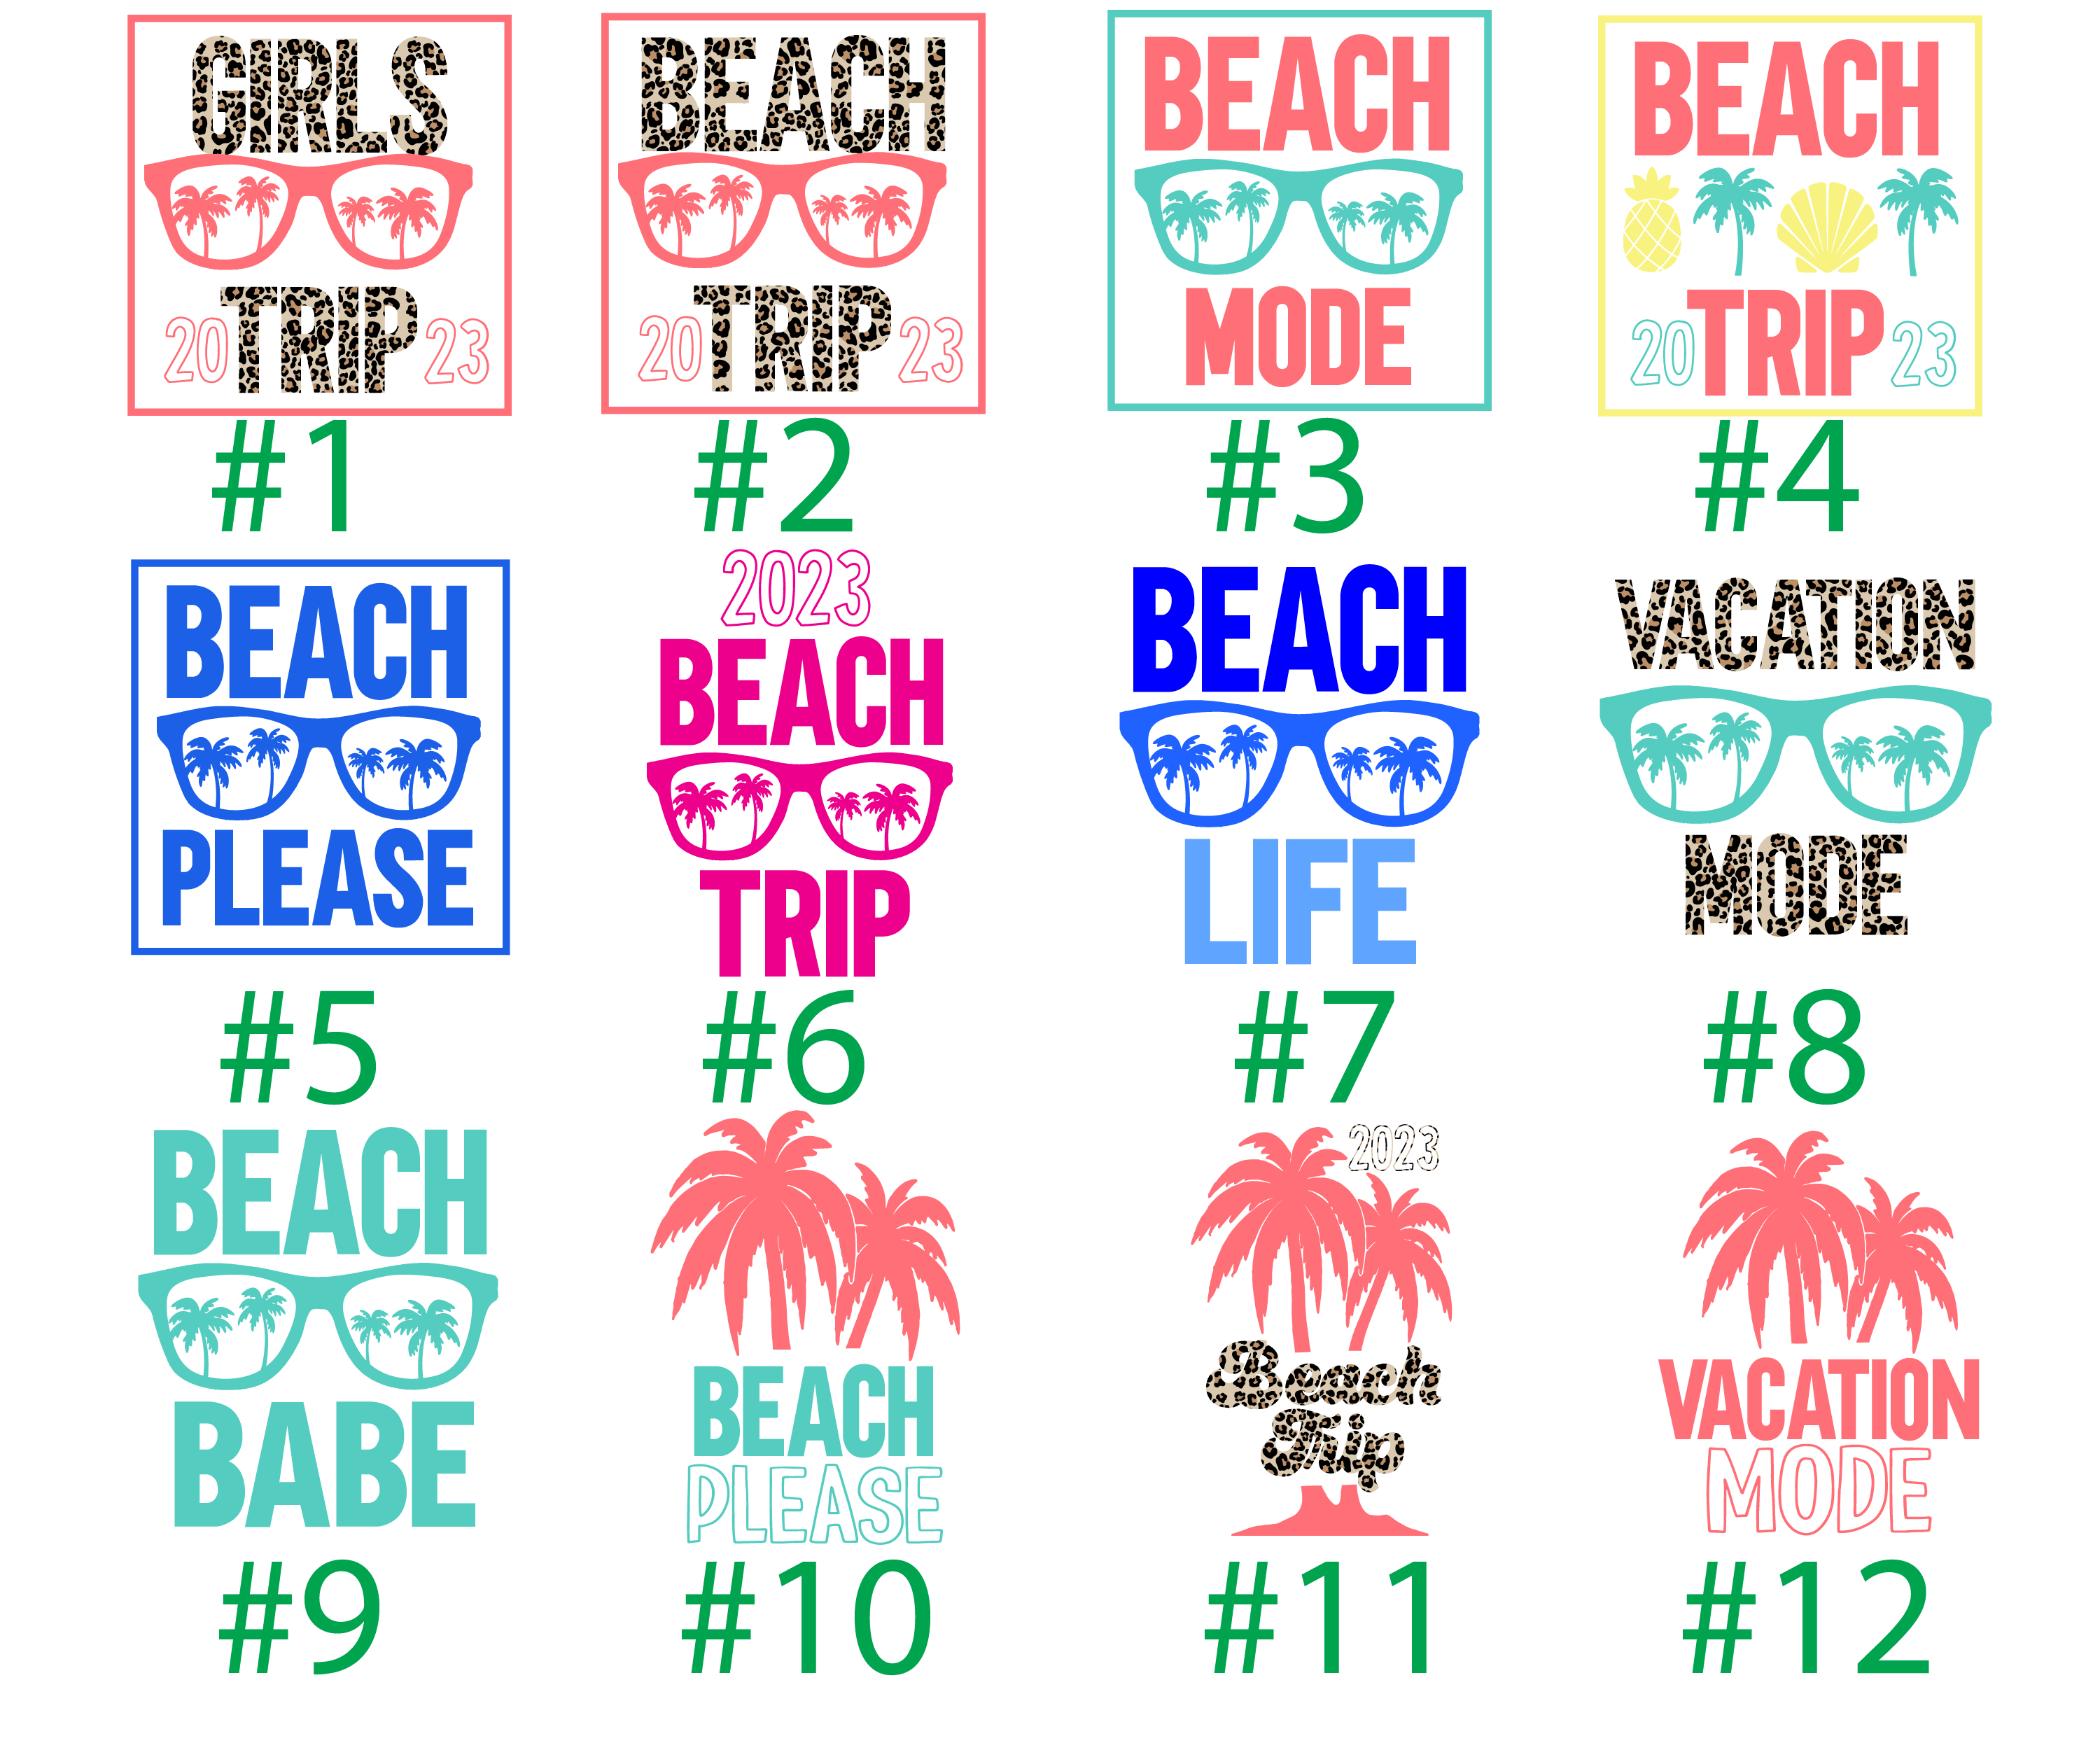 Beach Summer Family Vacation Matching Shirts